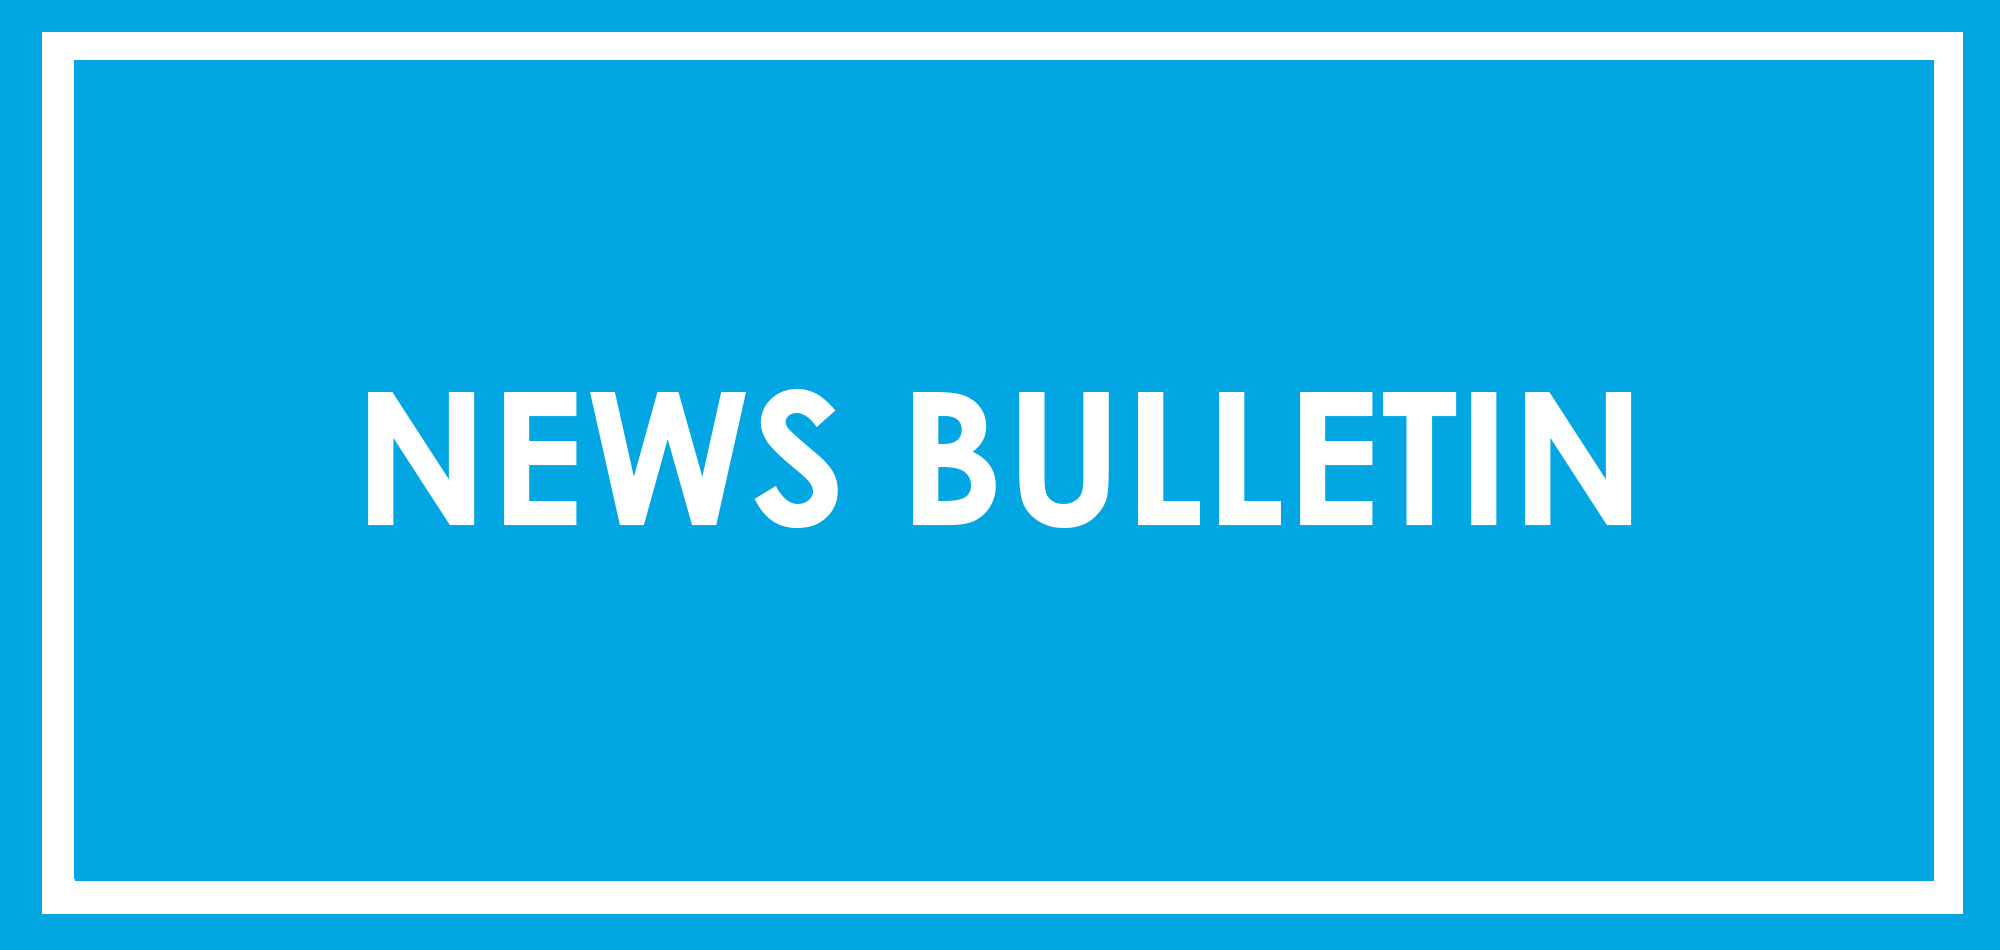 News Bulletin - 08.04.20